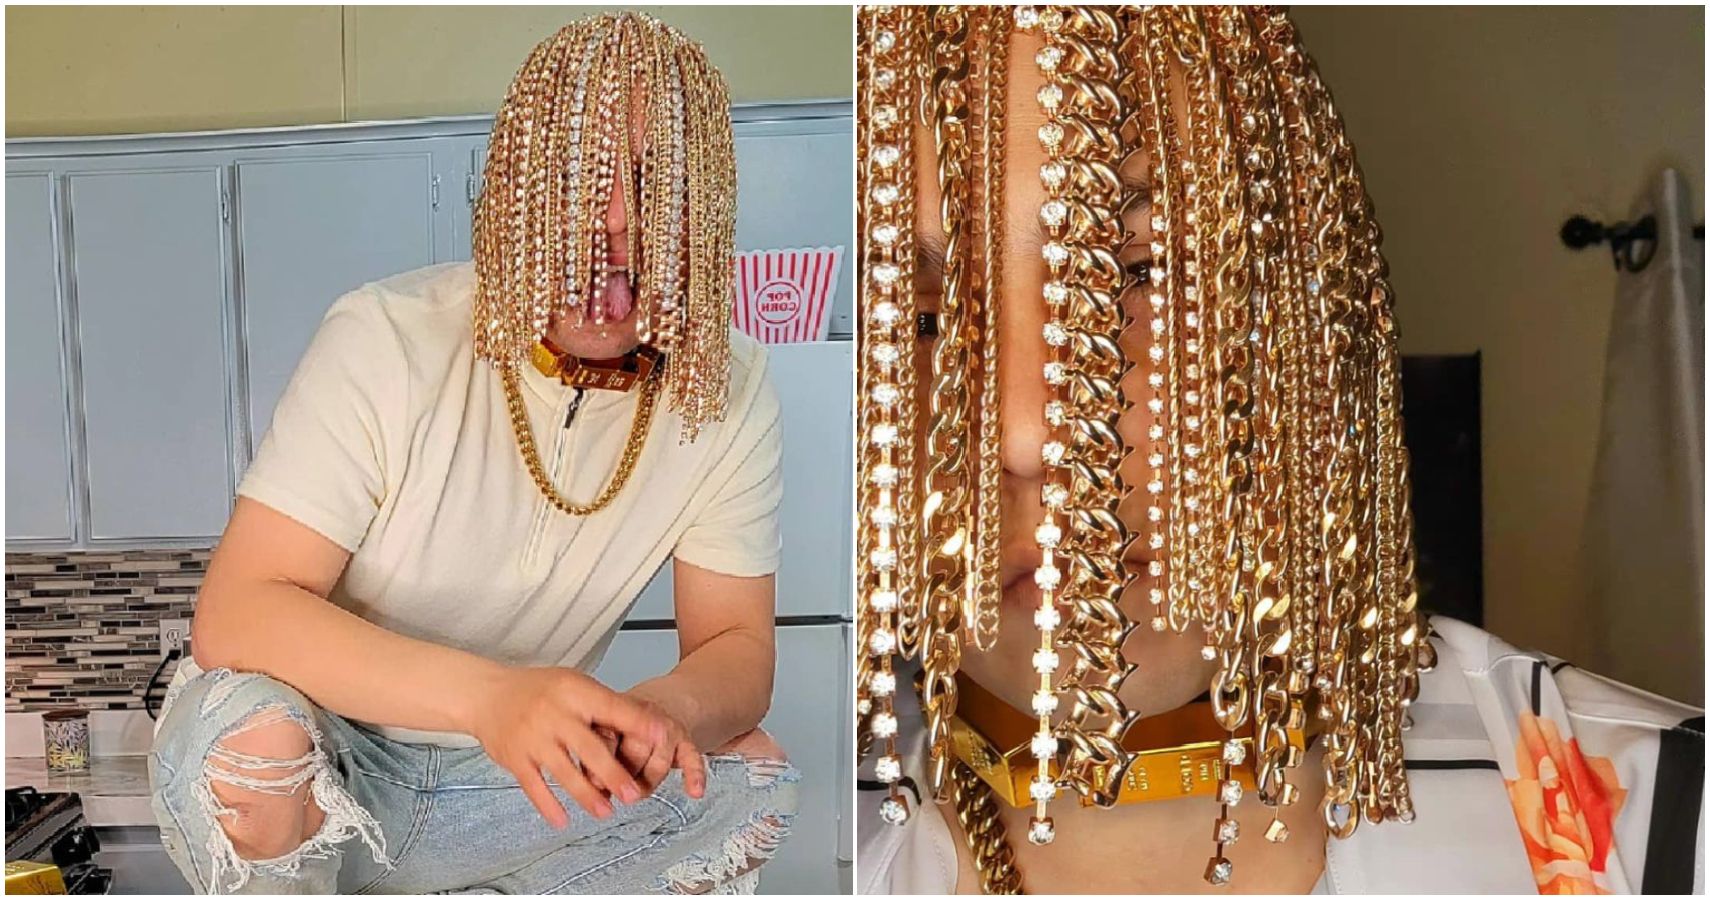 Black Hair Men Pendant Hiphop Jewelry Gold Filled CZ Necklace Rapper  Accessories | eBay